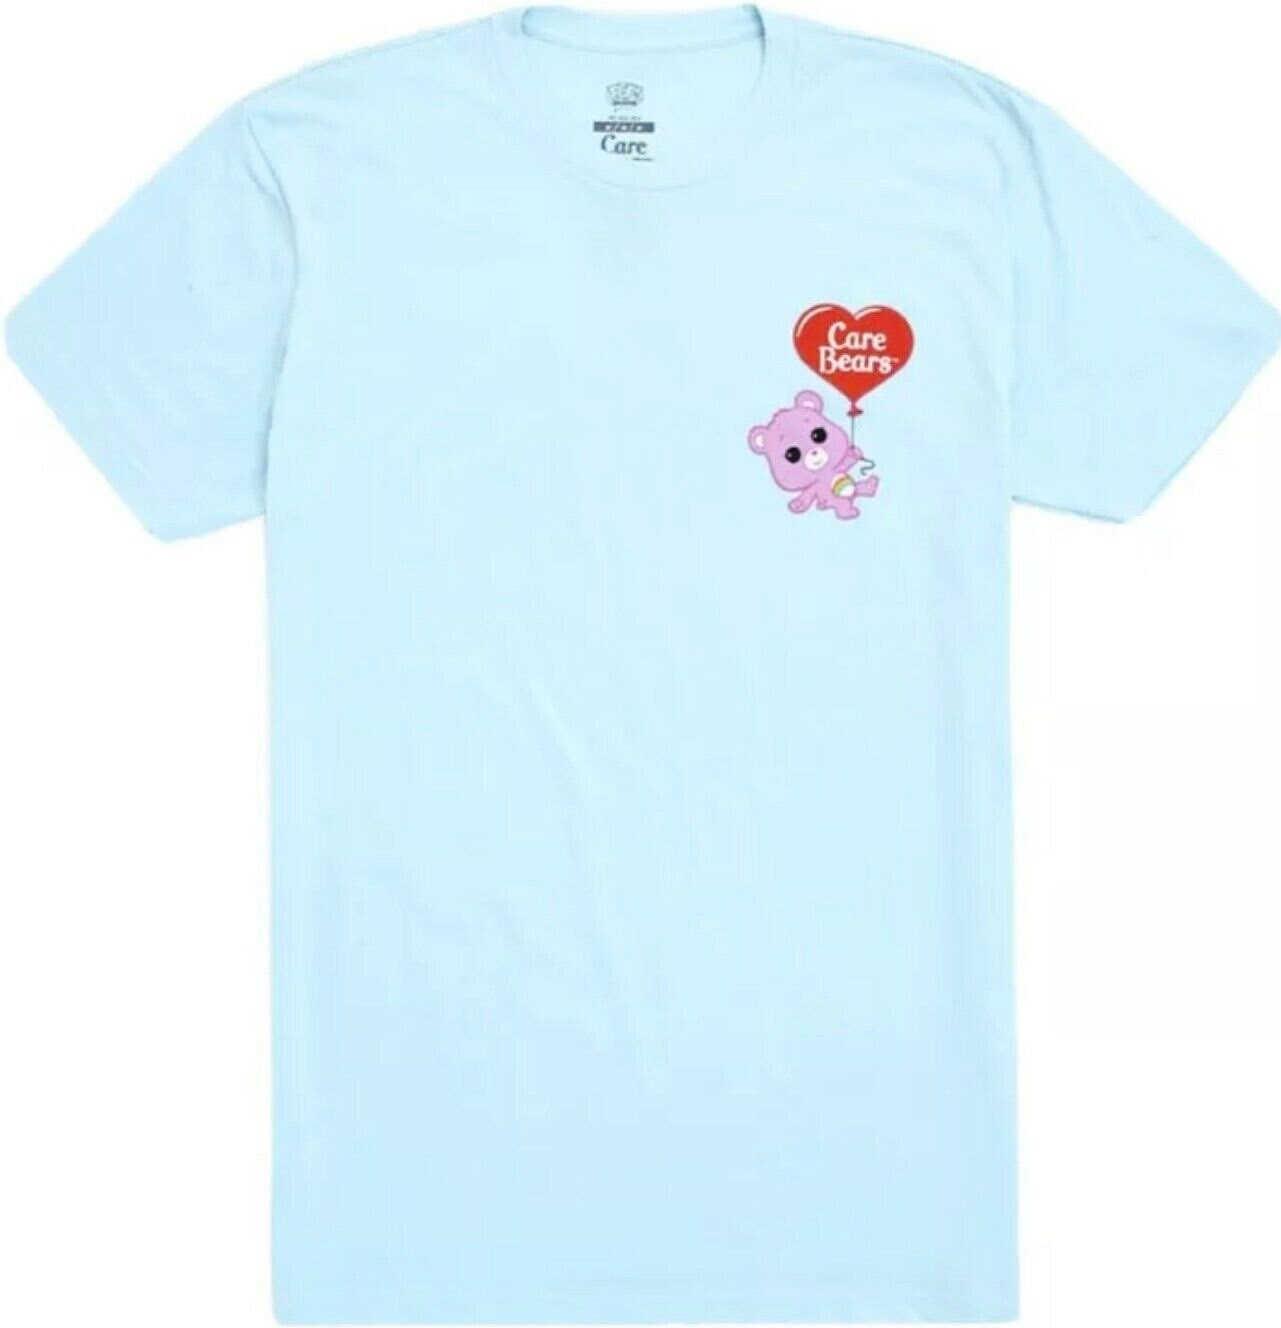 Cheer Bear Care Bears Funko Pop Tees T-Shirt